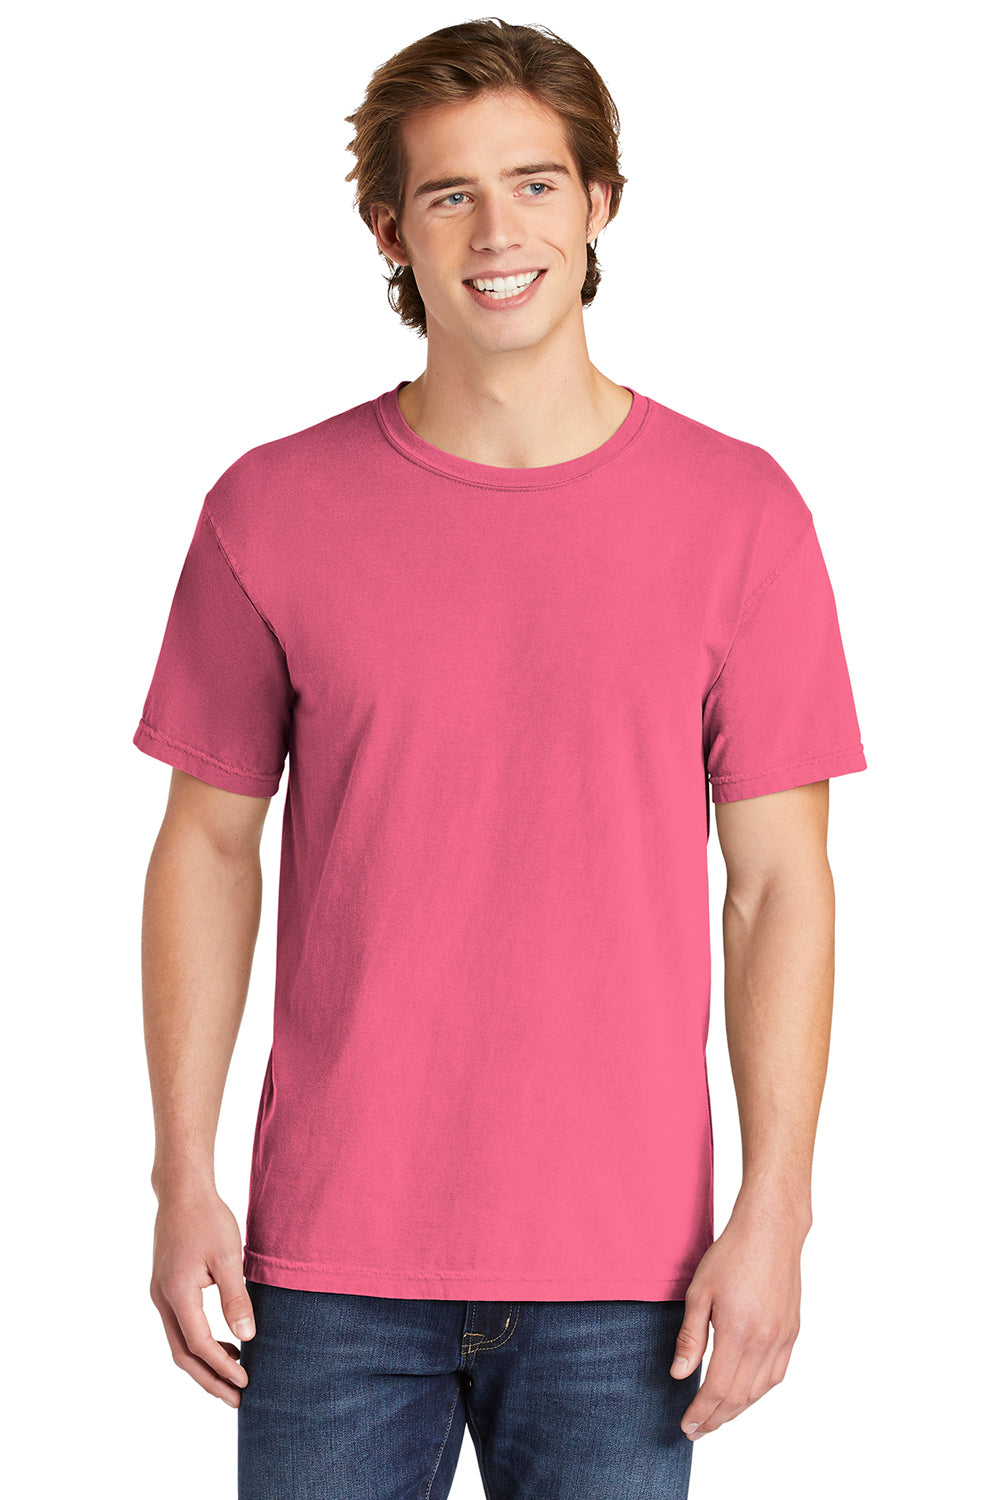 Comfort Colors 1717/C1717 Mens Short Sleeve Crewneck T-Shirt Crunchberry Pink Front